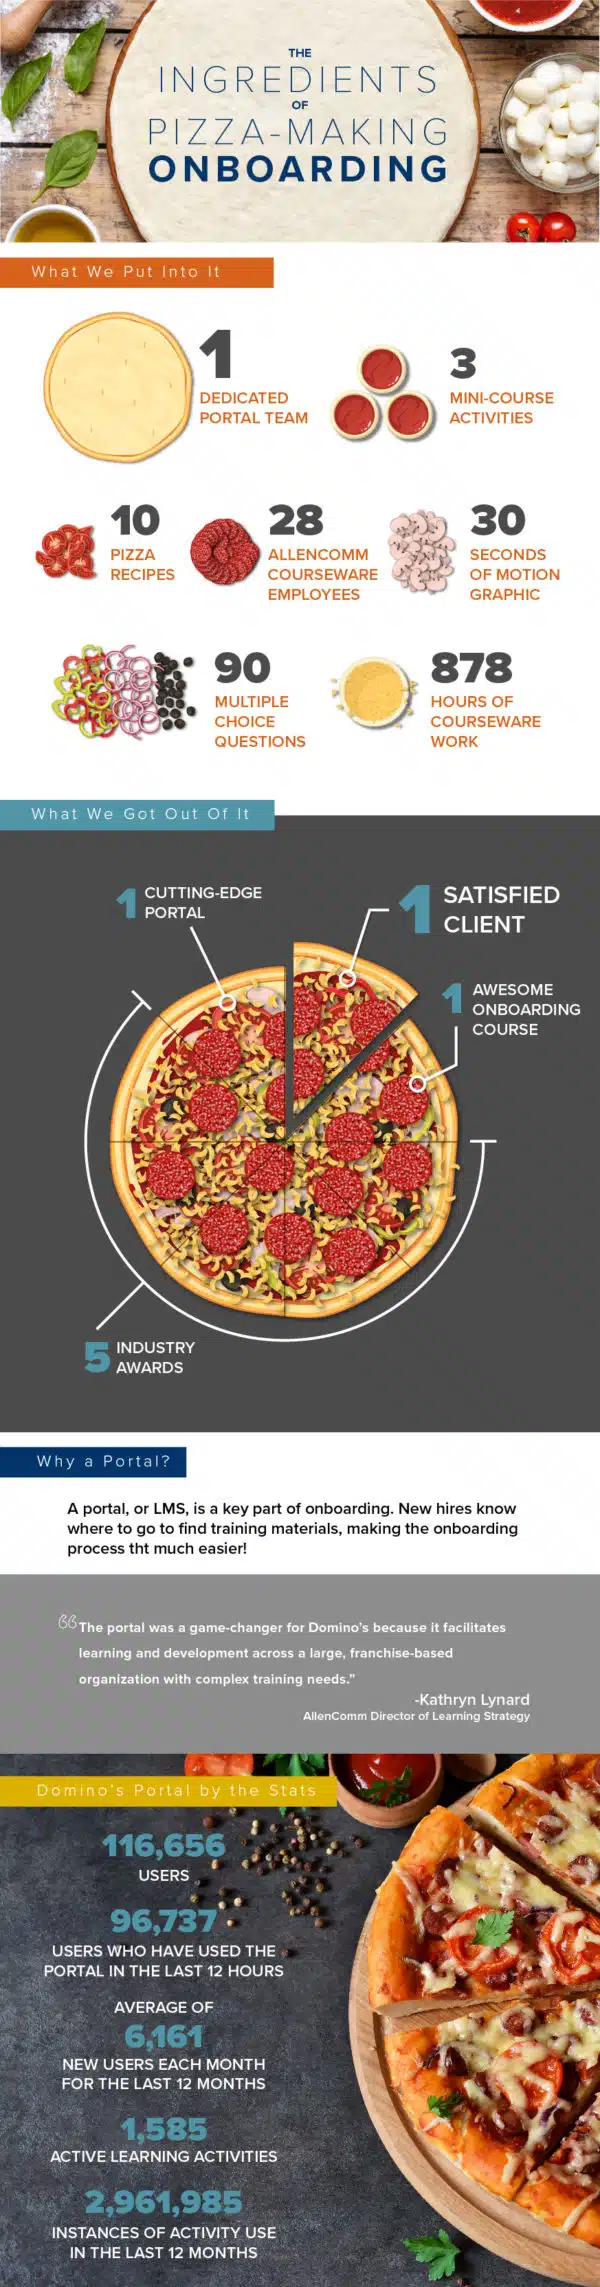 Ingredients in Pizza-Making Onboarding -- AllenComm